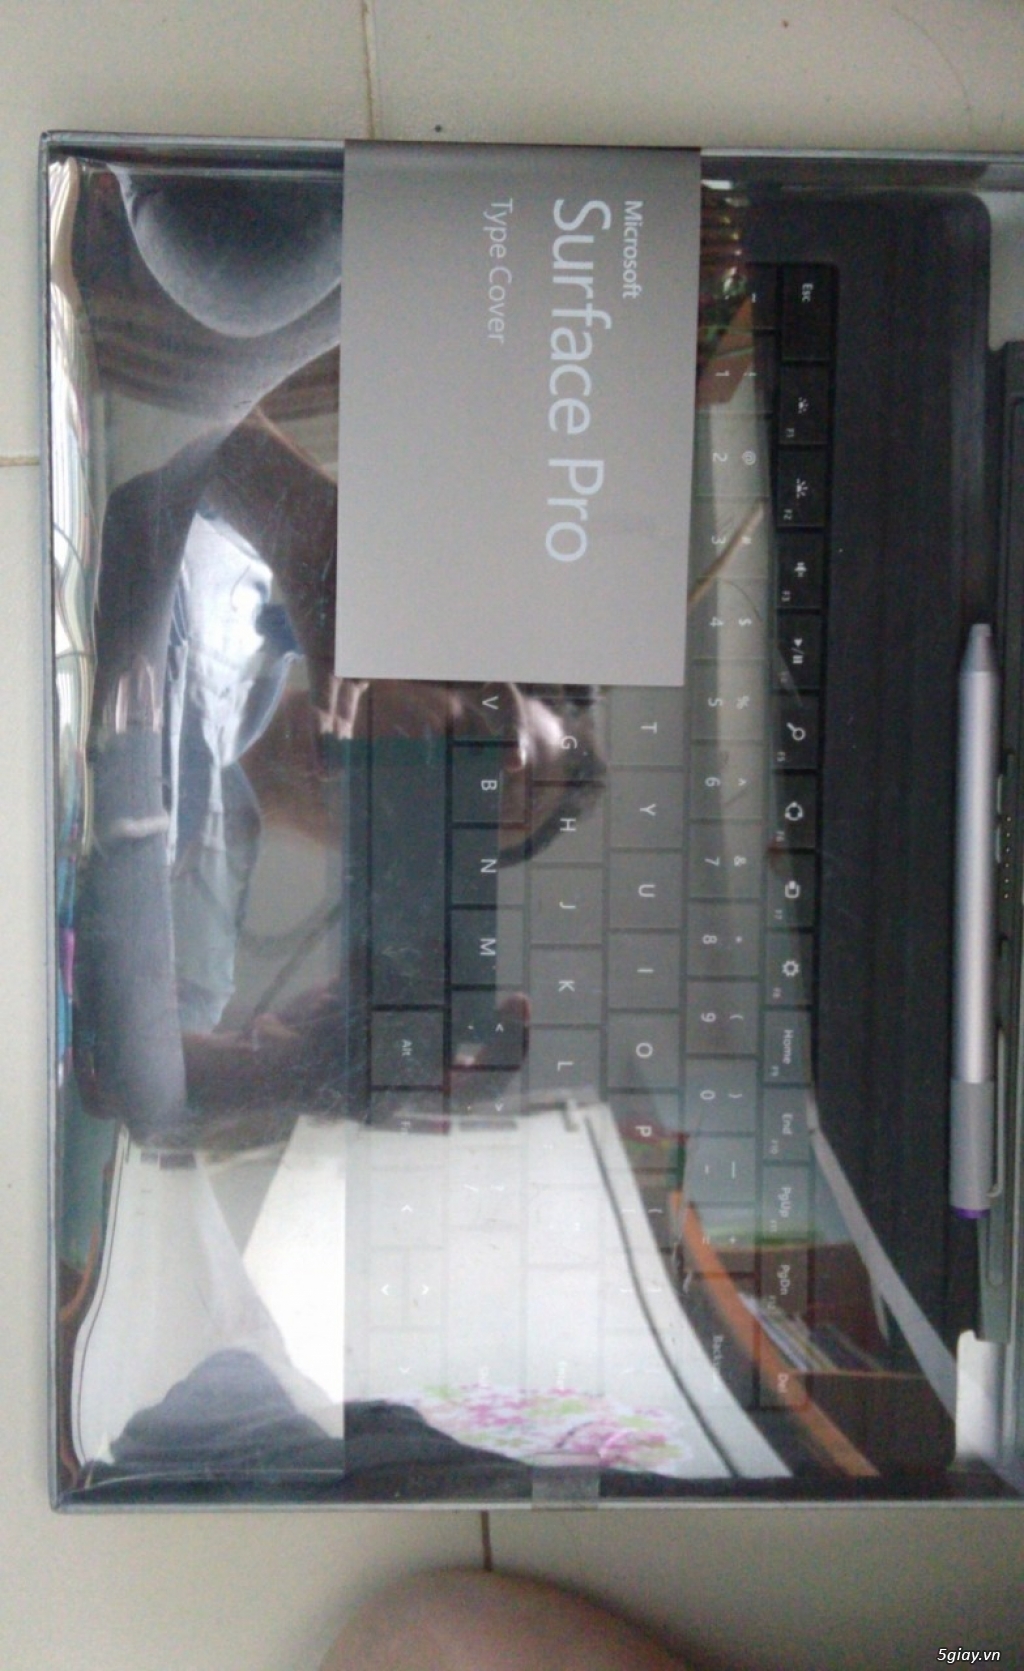 Surface Pro 3 (i5 - SSD 128GB - RAM 4G)+ Type Cover + Pen + Sạc - 3